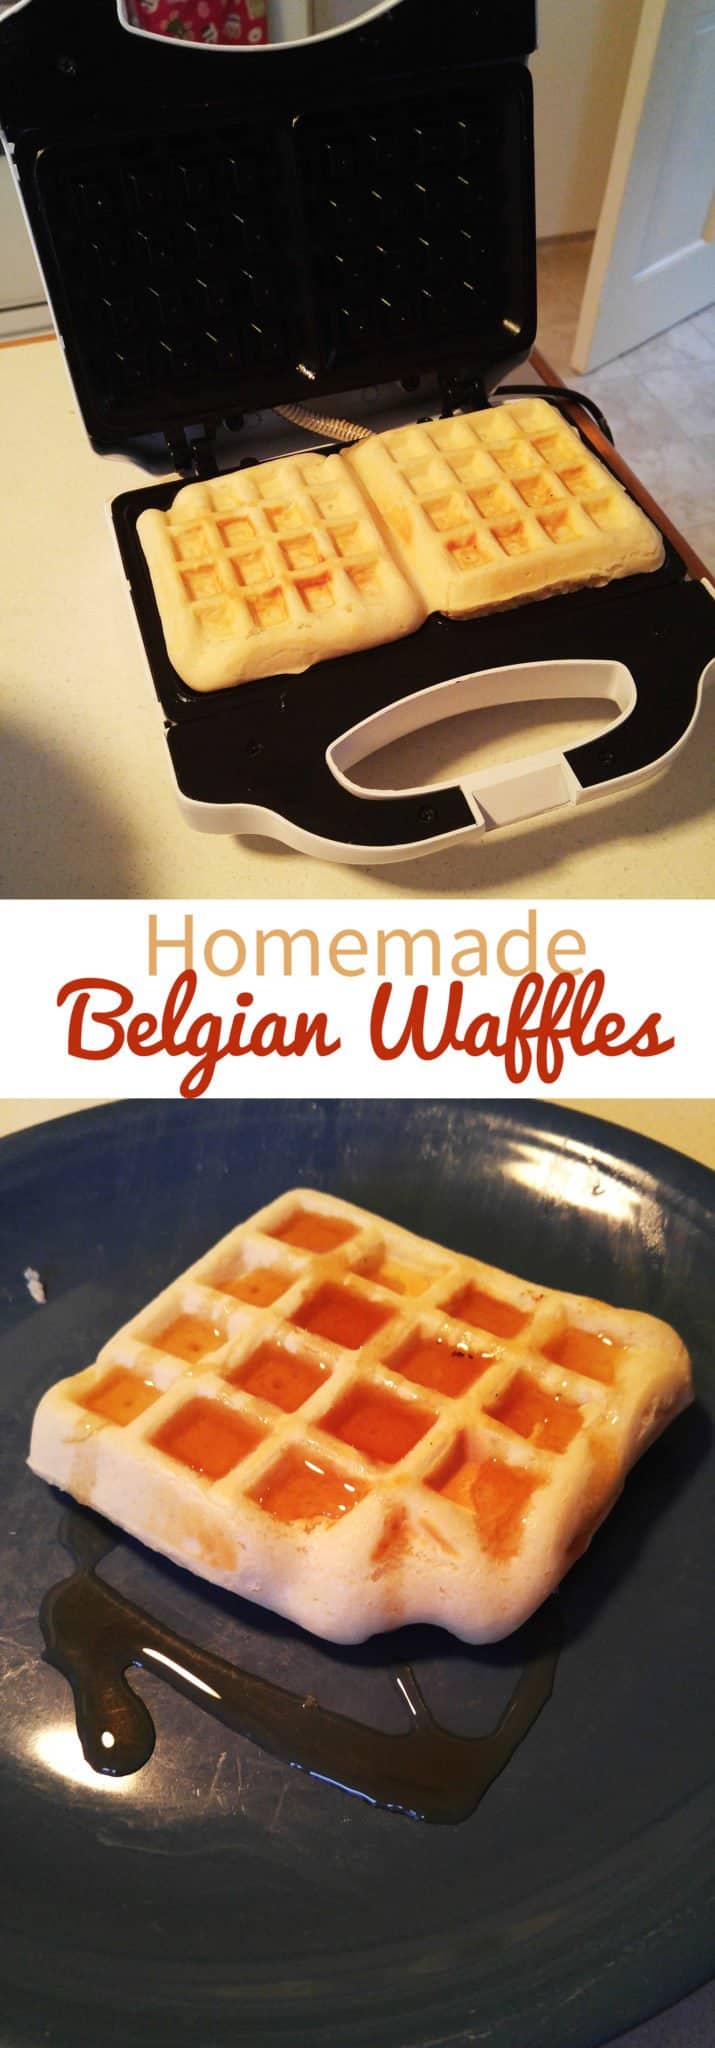 homemade belgian waffles